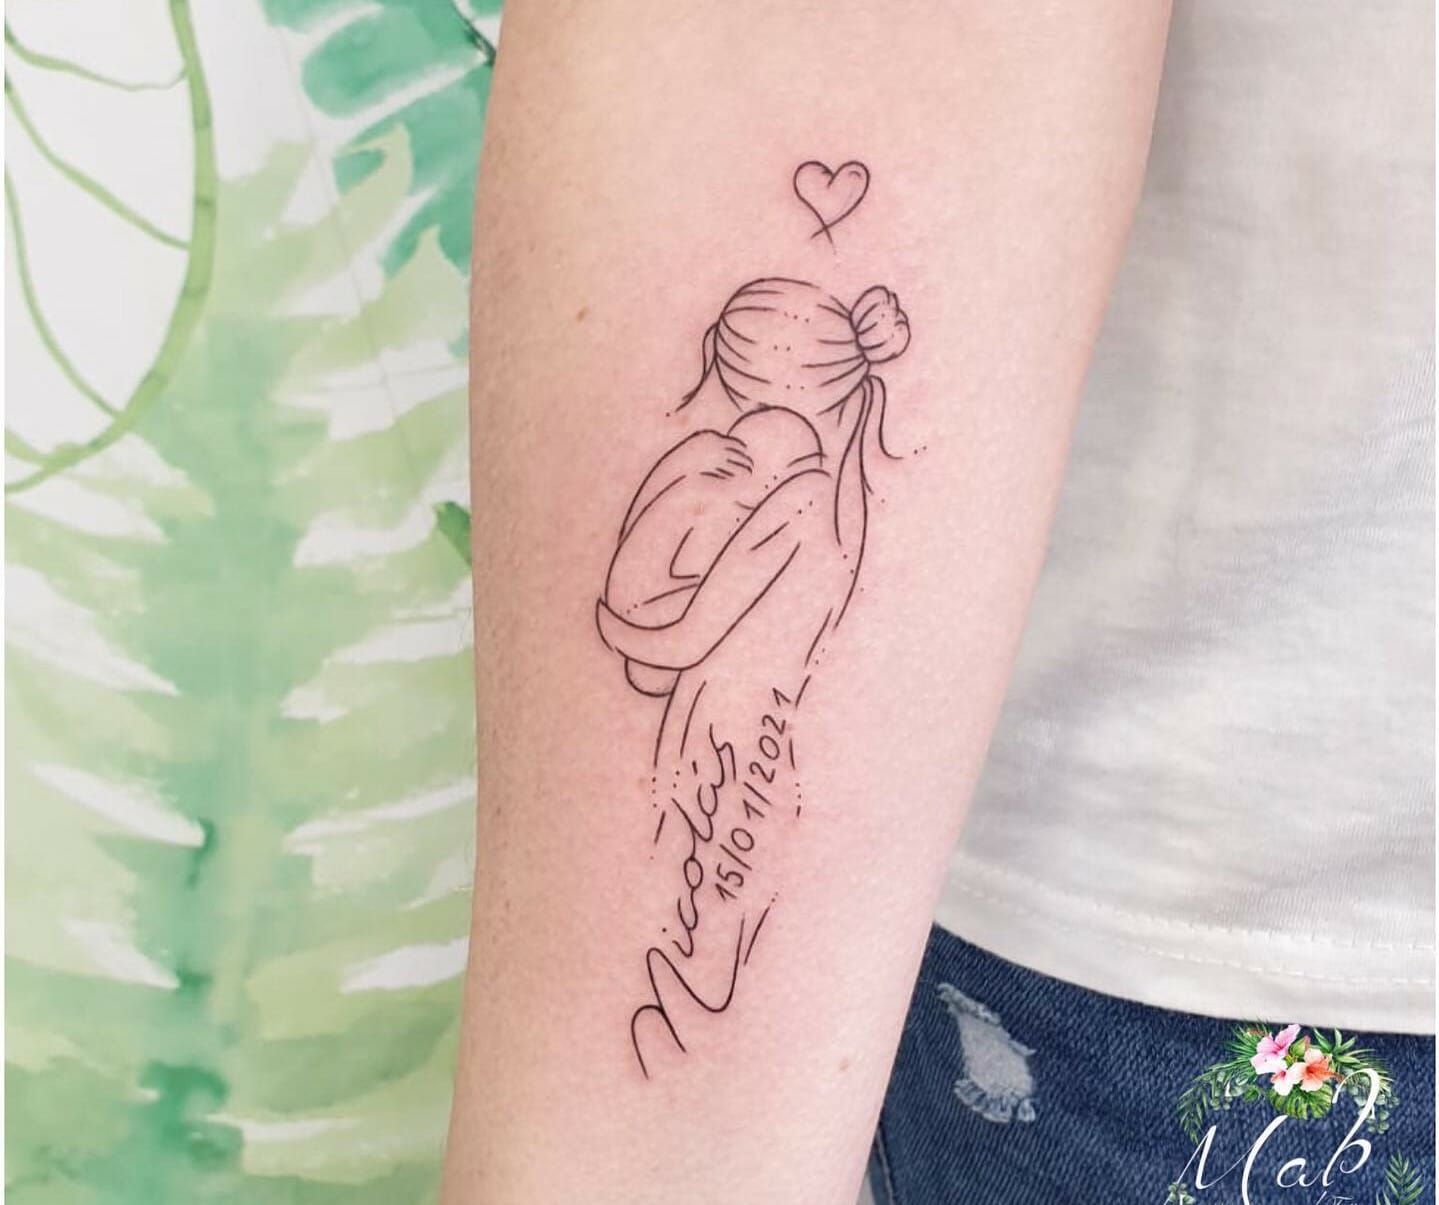 Cute Tattoo Ideas For Moms | POPSUGAR Family